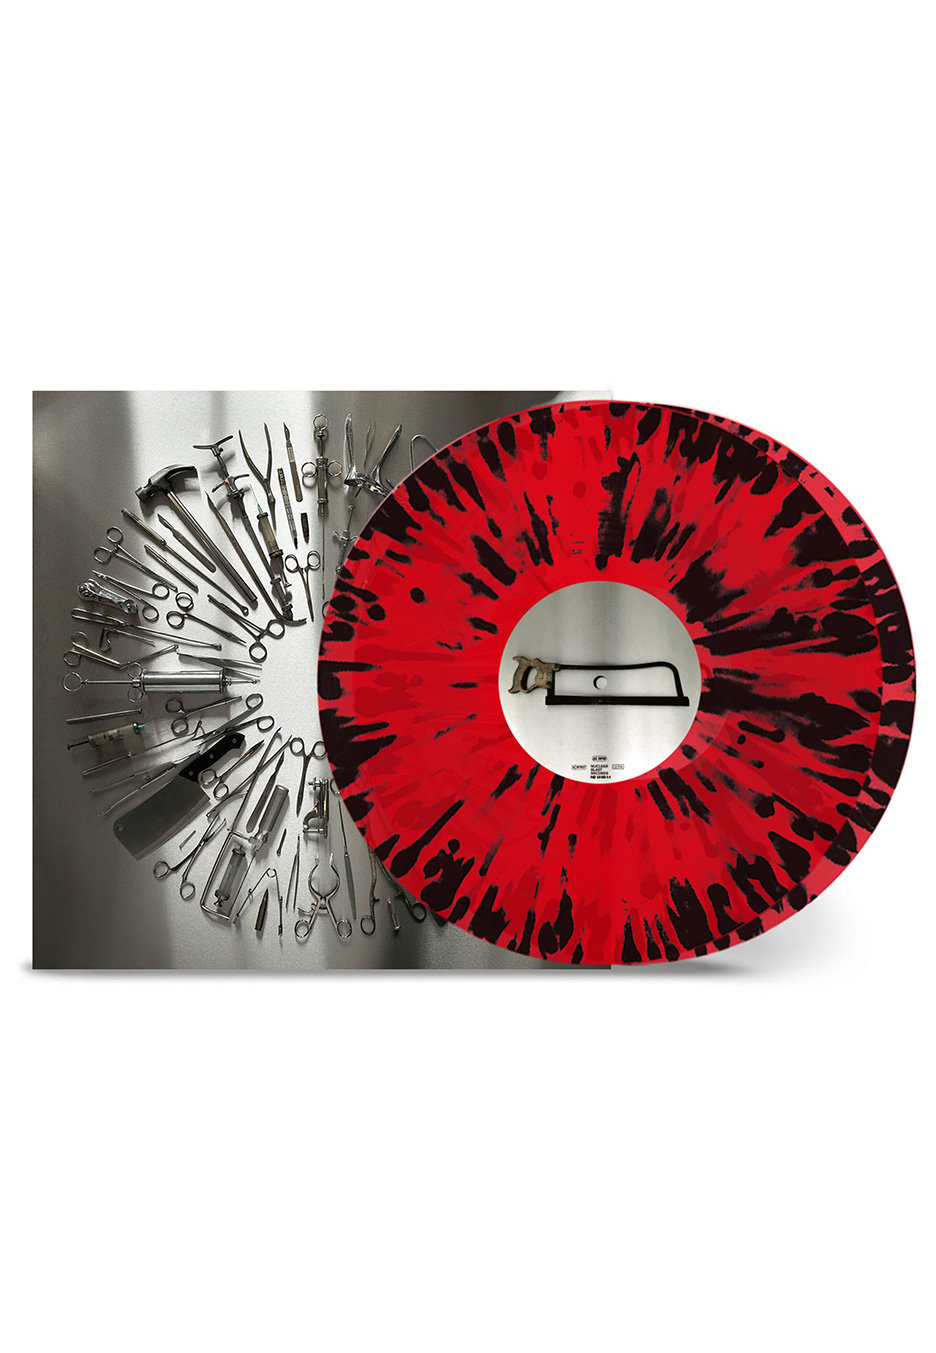 Carcass - Surgical Steel Ltd. Red w/ Black - Splattered 2 Vinyl